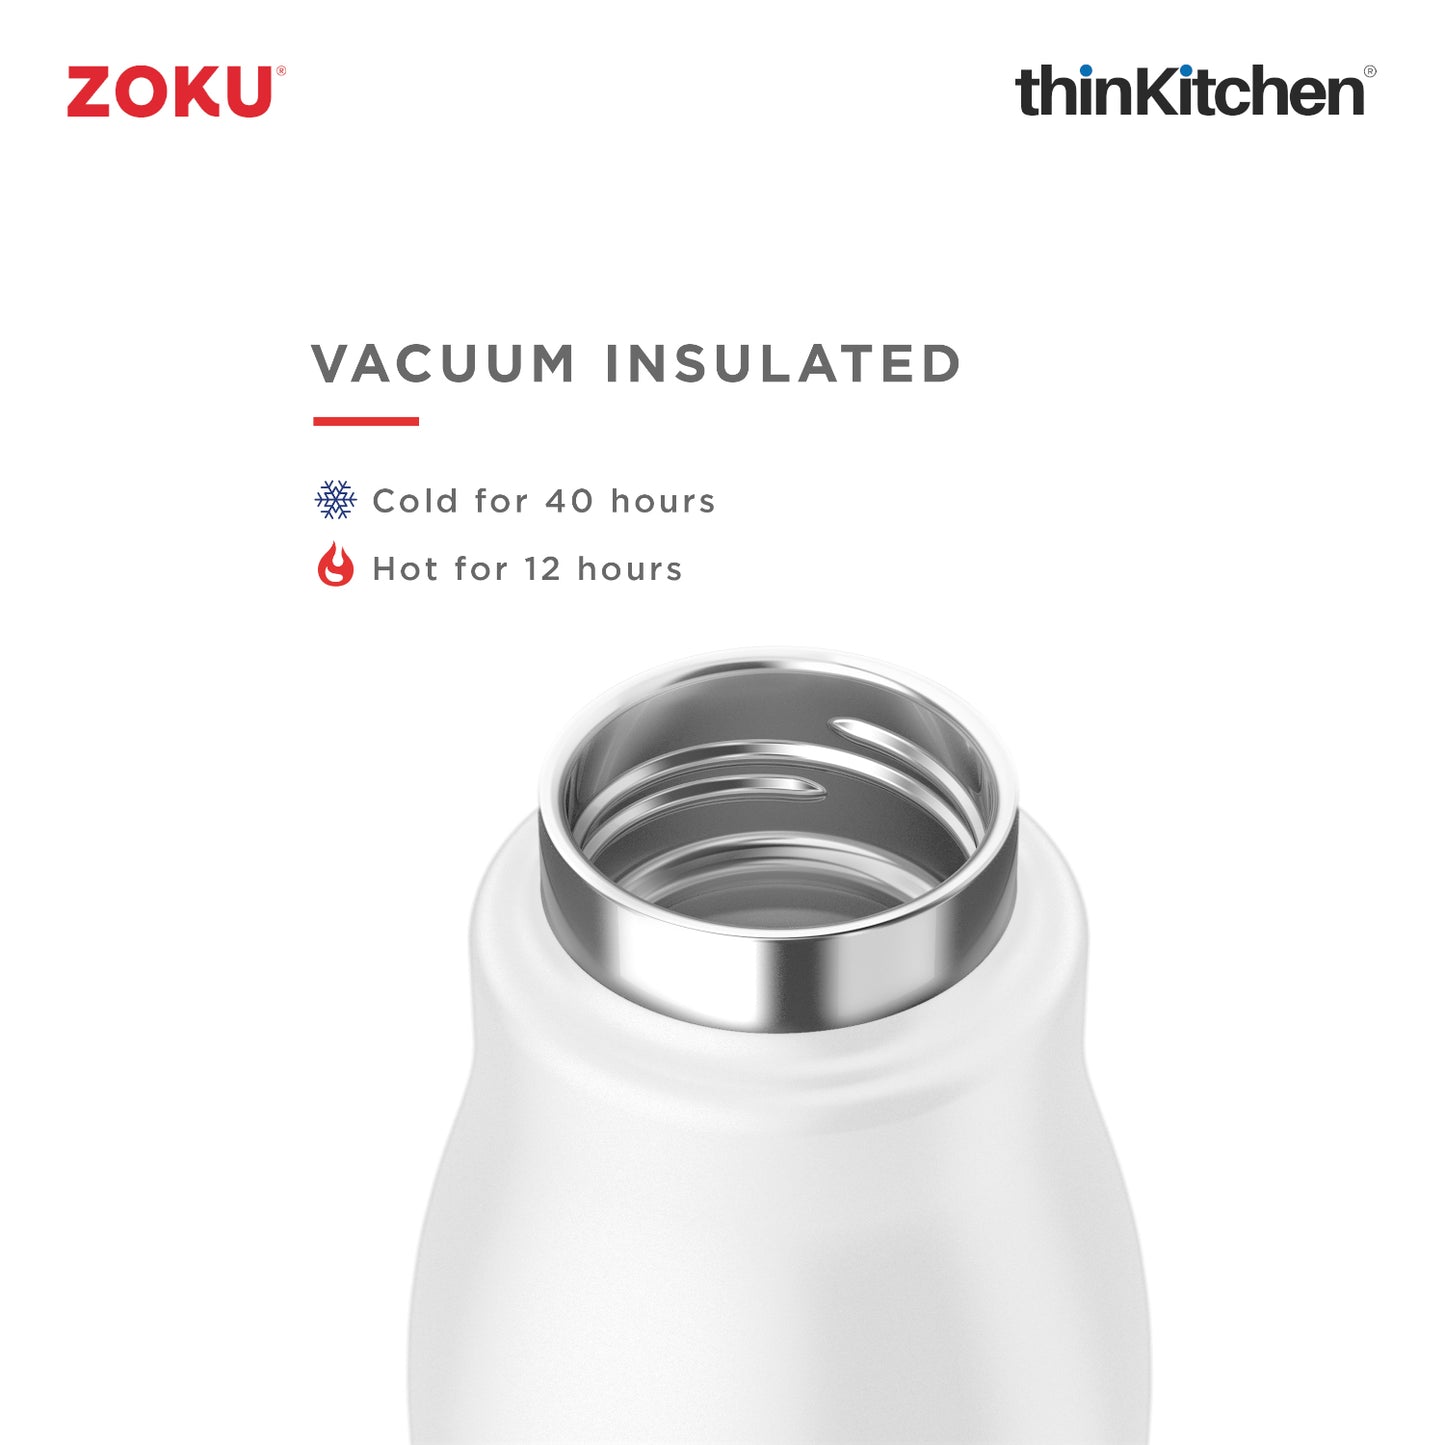 Zoku Stainless Steel Bottle White 500ml